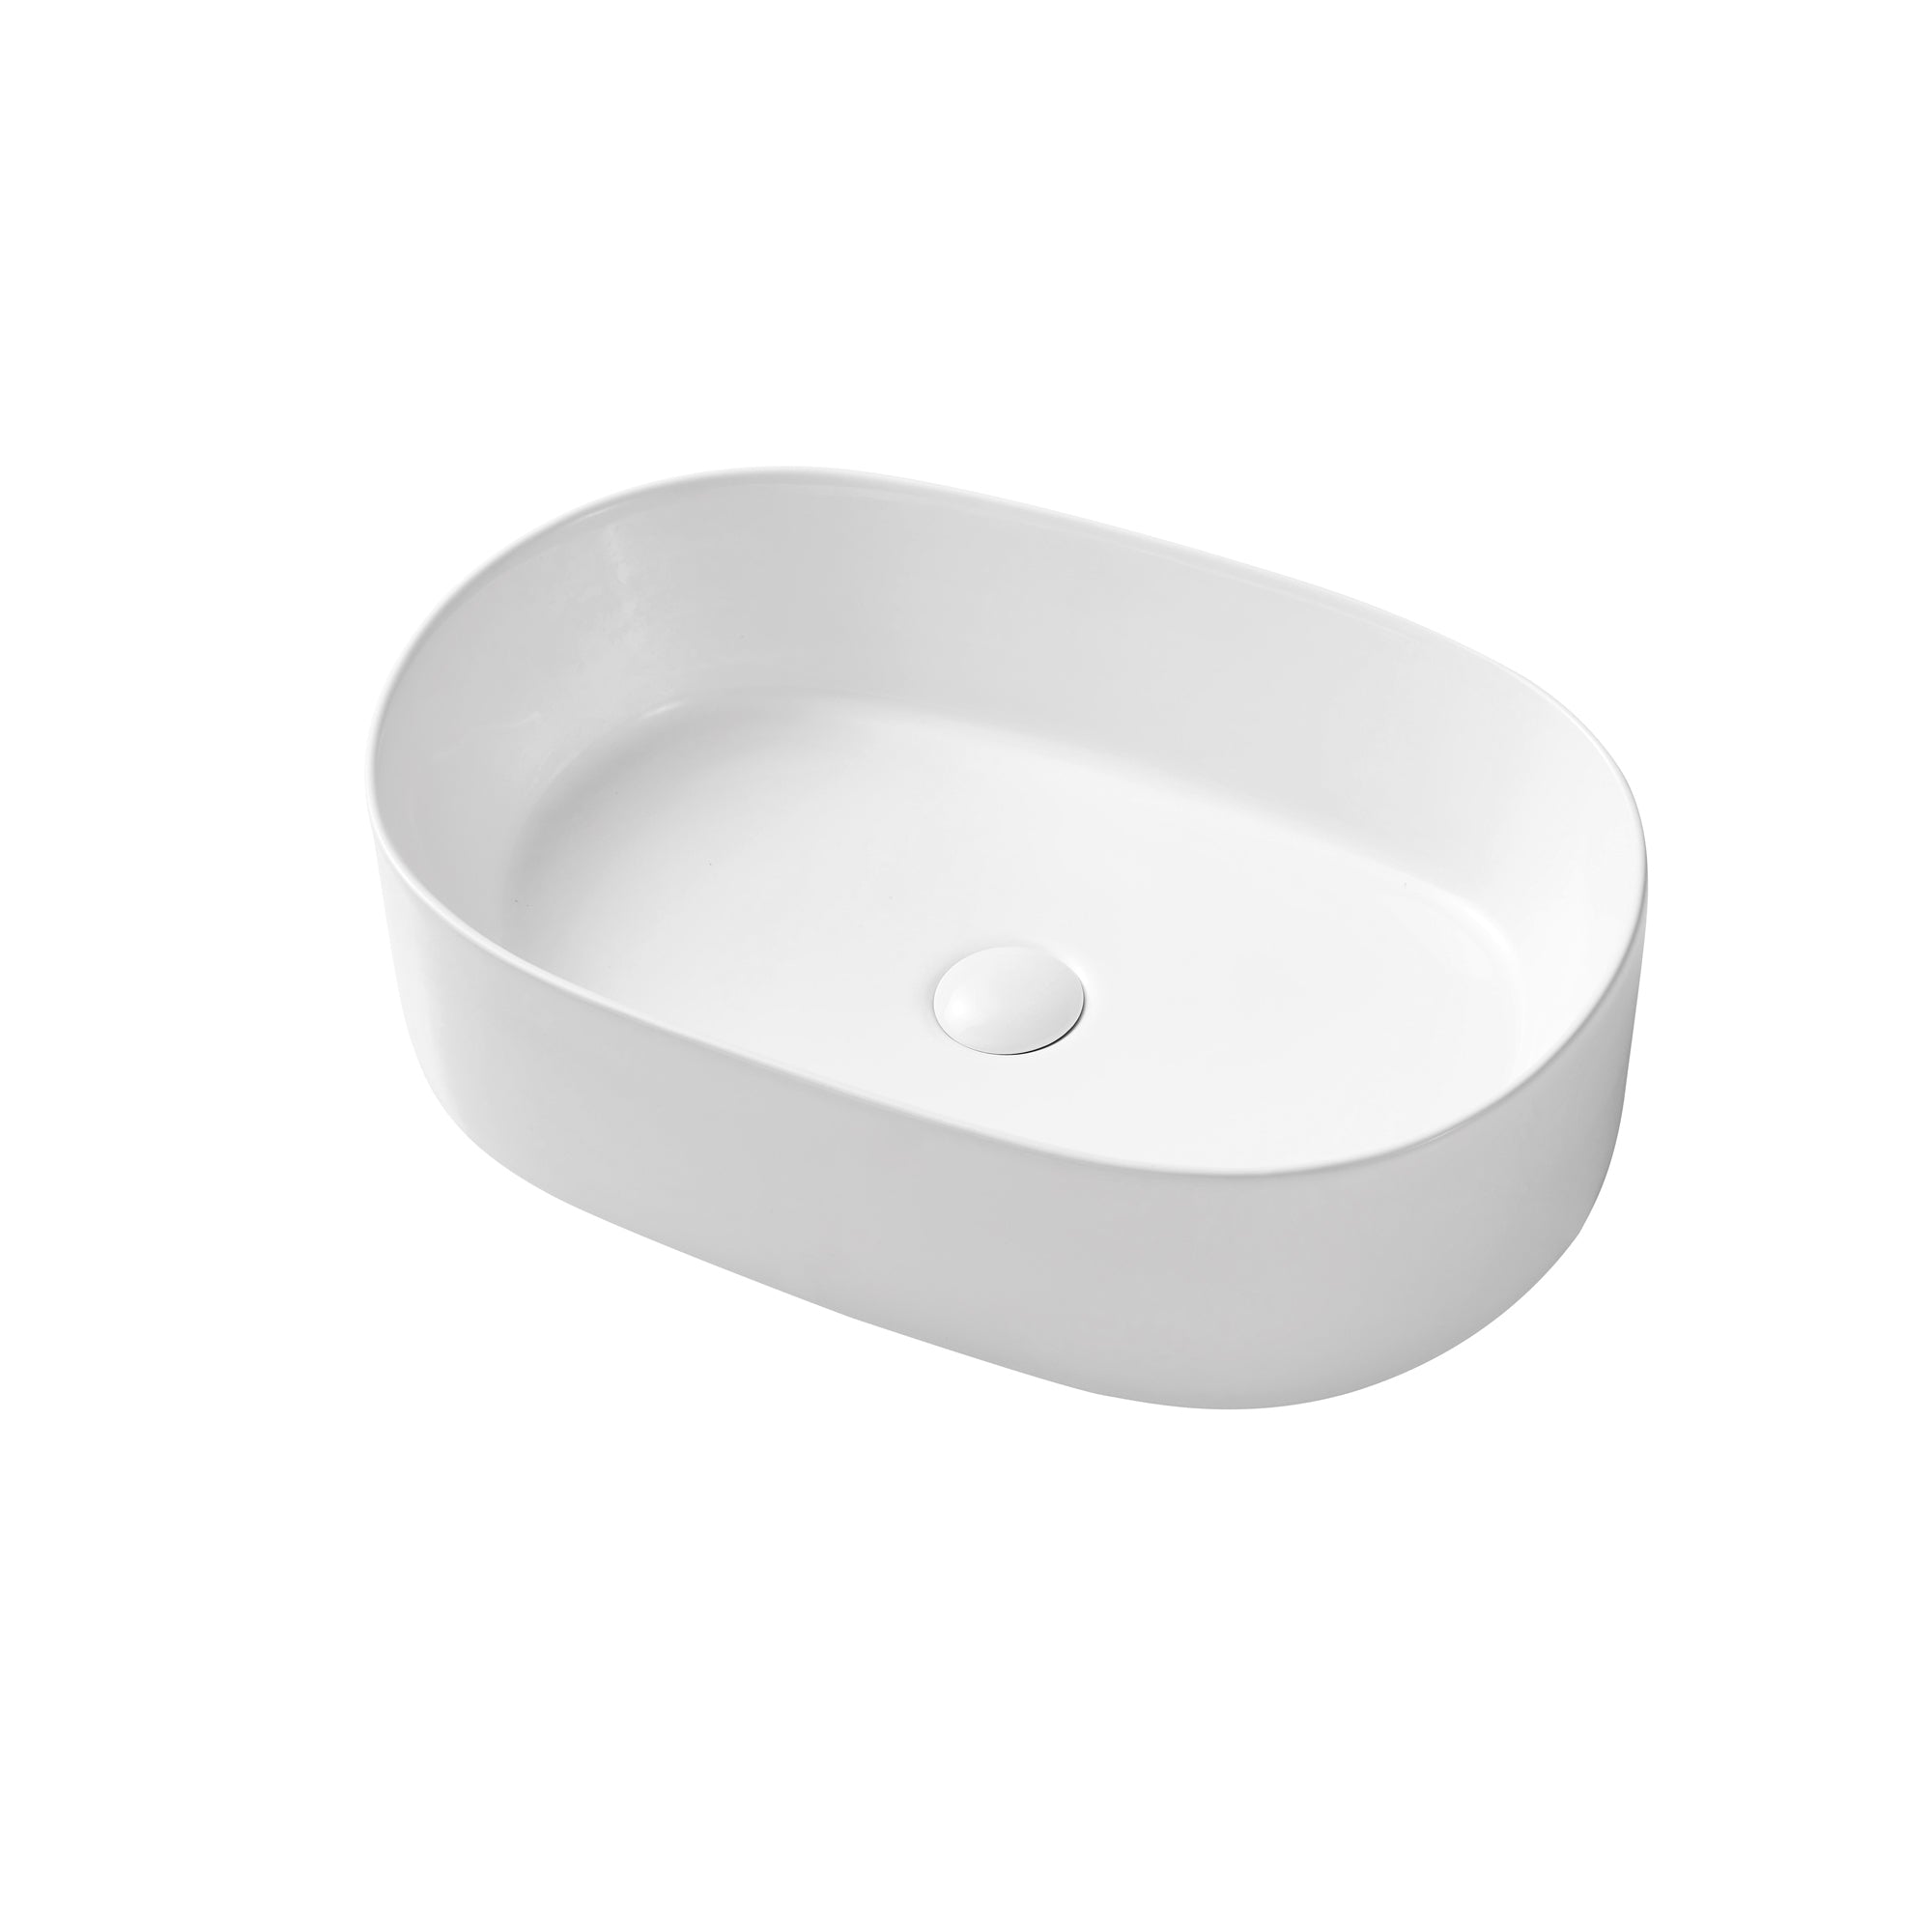 Ceramic Oval Above Counter White Bathroom Sink Art Basin